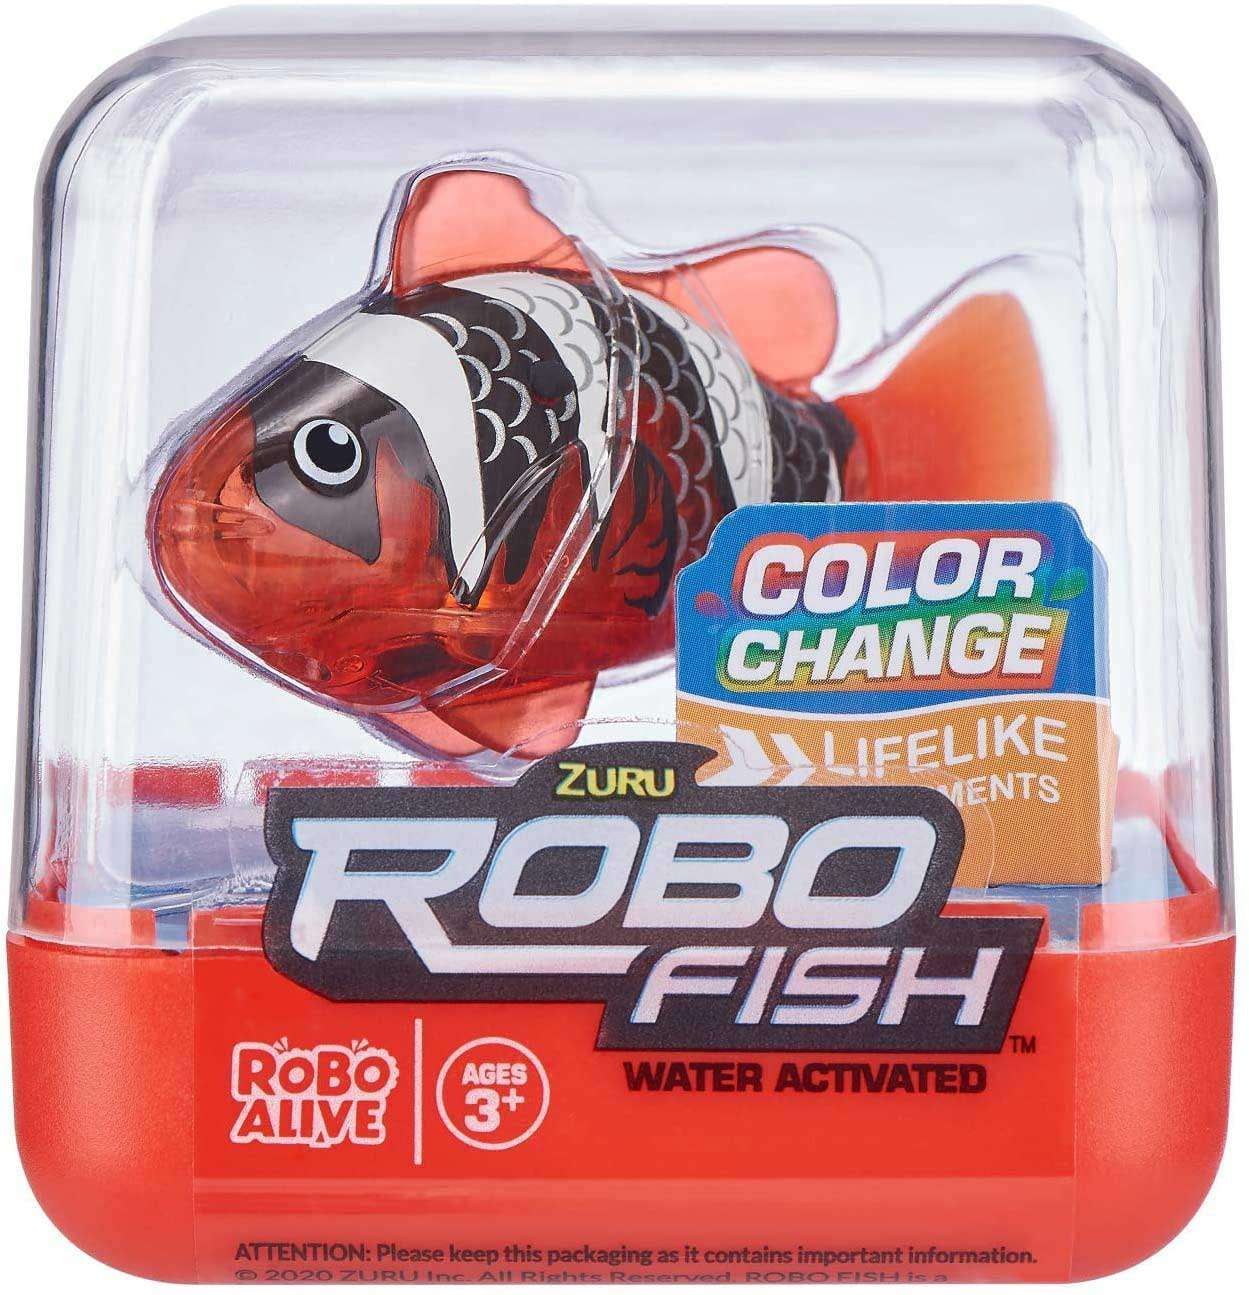 Zuru Robo Alive Robo Fish Changes Color Robotic Swimming Fish Water Activated Series 3, Red | Walmart (US)